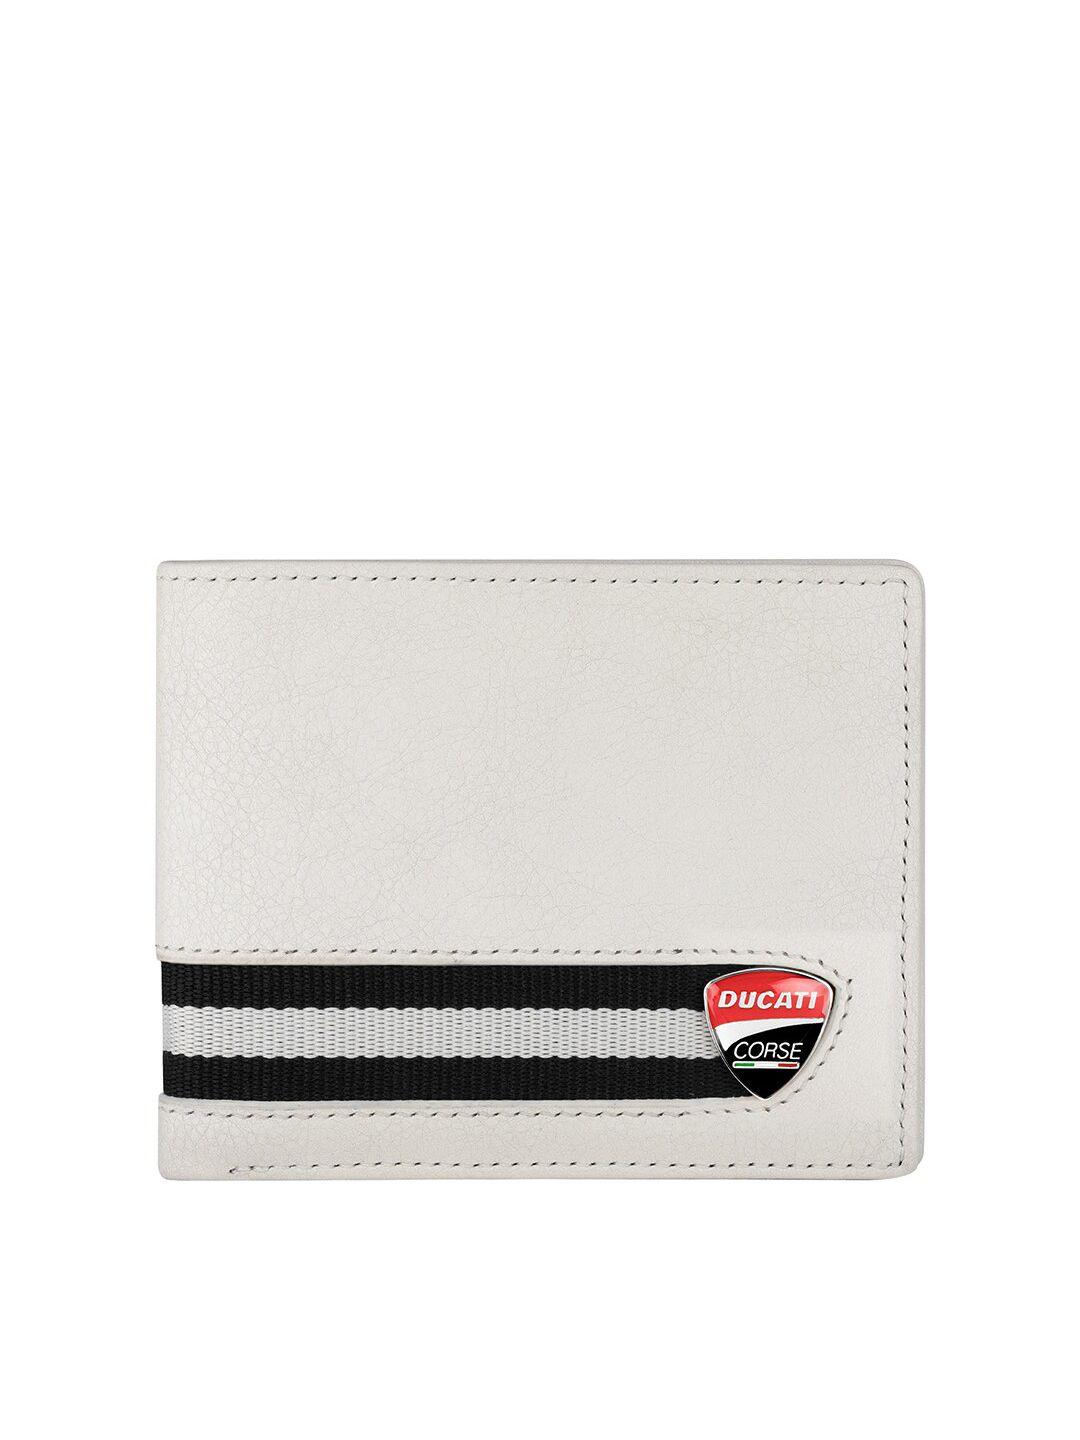 ducati corse men white & brown striped leather two fold wallet